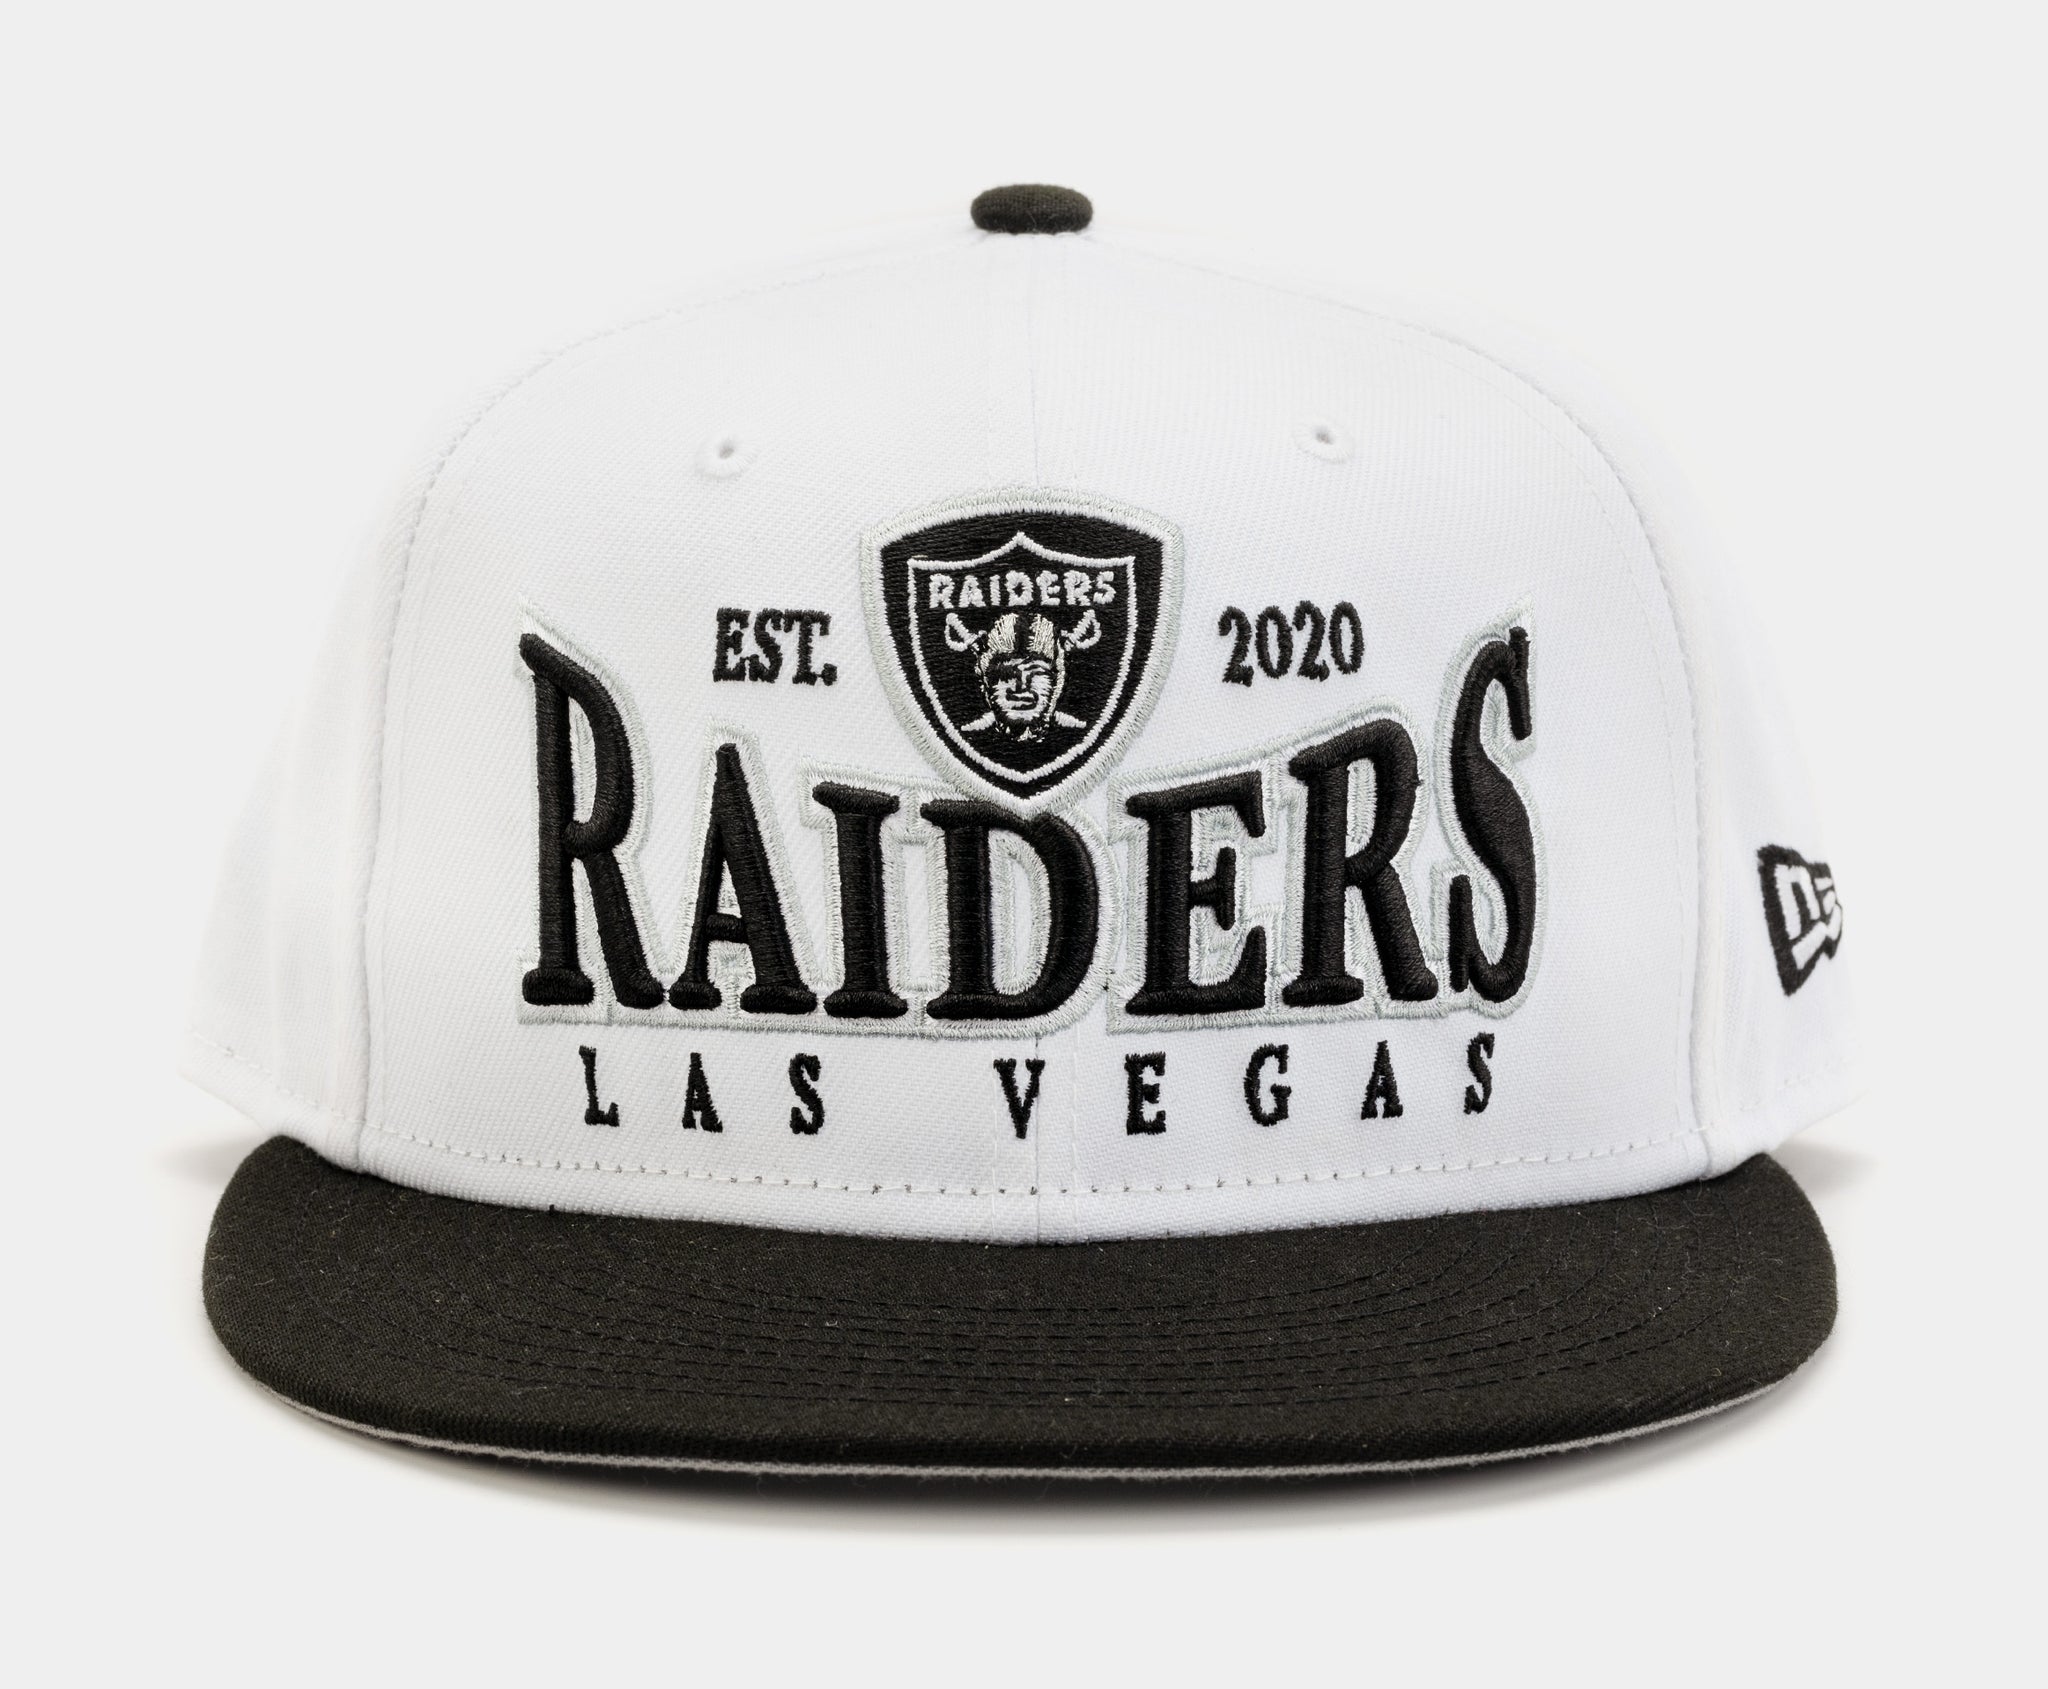 Las Vegas Raiders Crest 9FIFTY Mens Snapback Hat (White/Black)